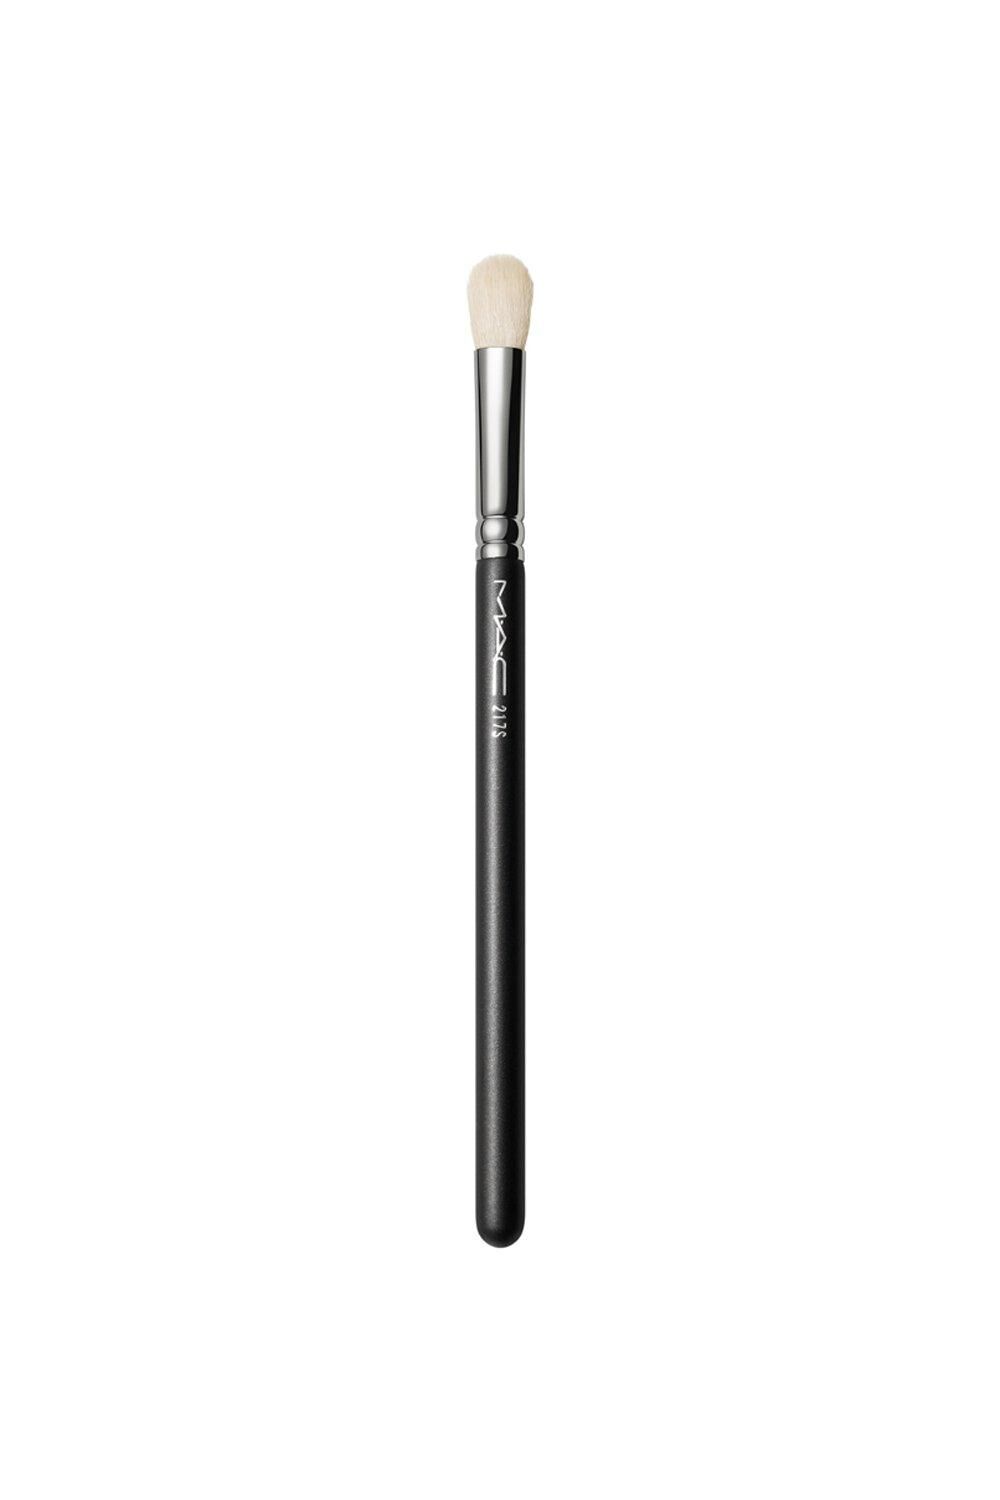 MAC Cosmetics 217 Blending Brush Eyeshadow Application Brush